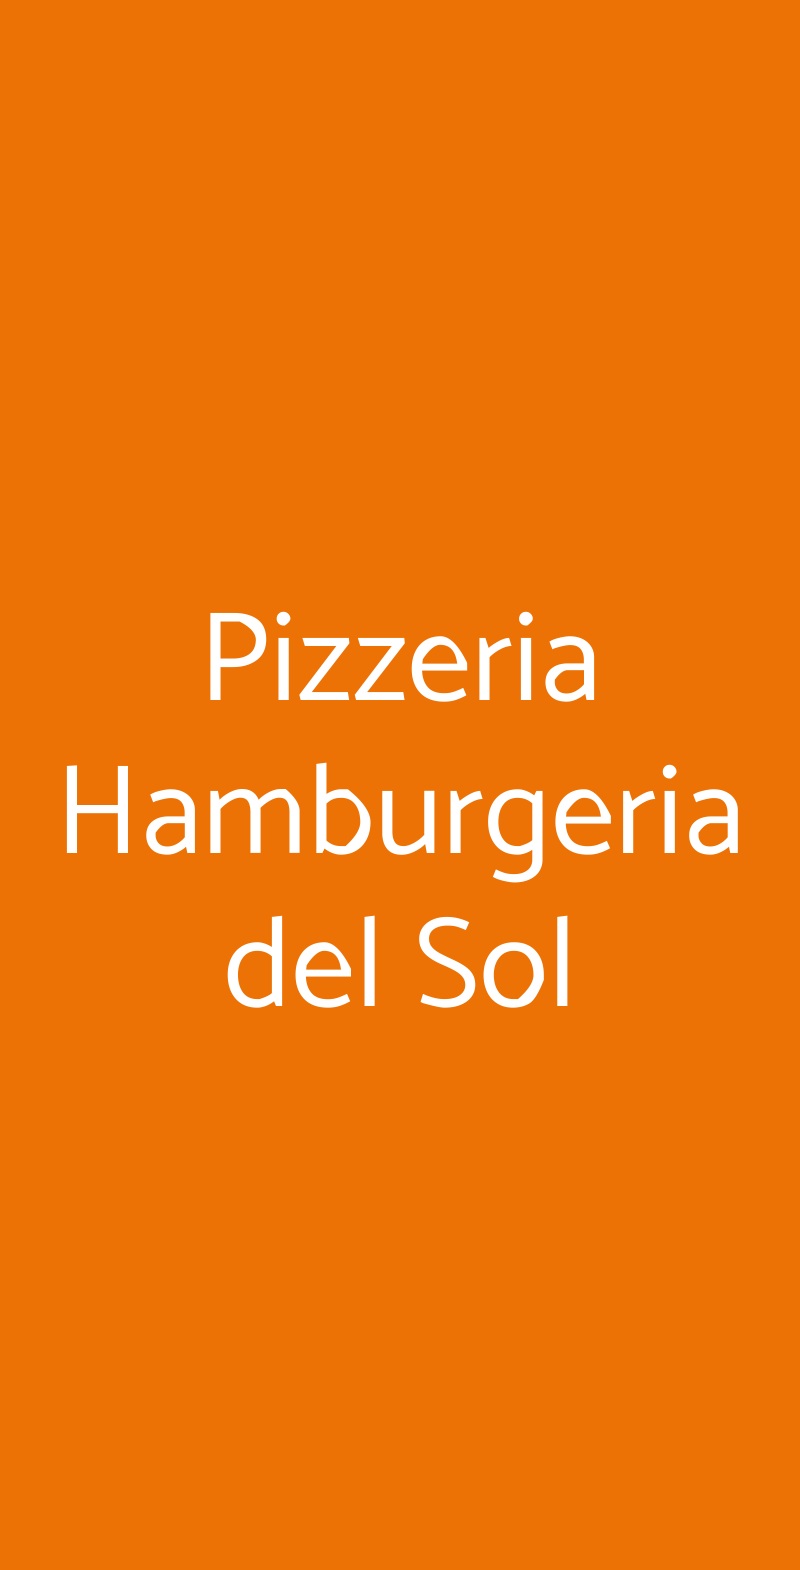 Pizzeria Hamburgeria del Sol Milano menù 1 pagina